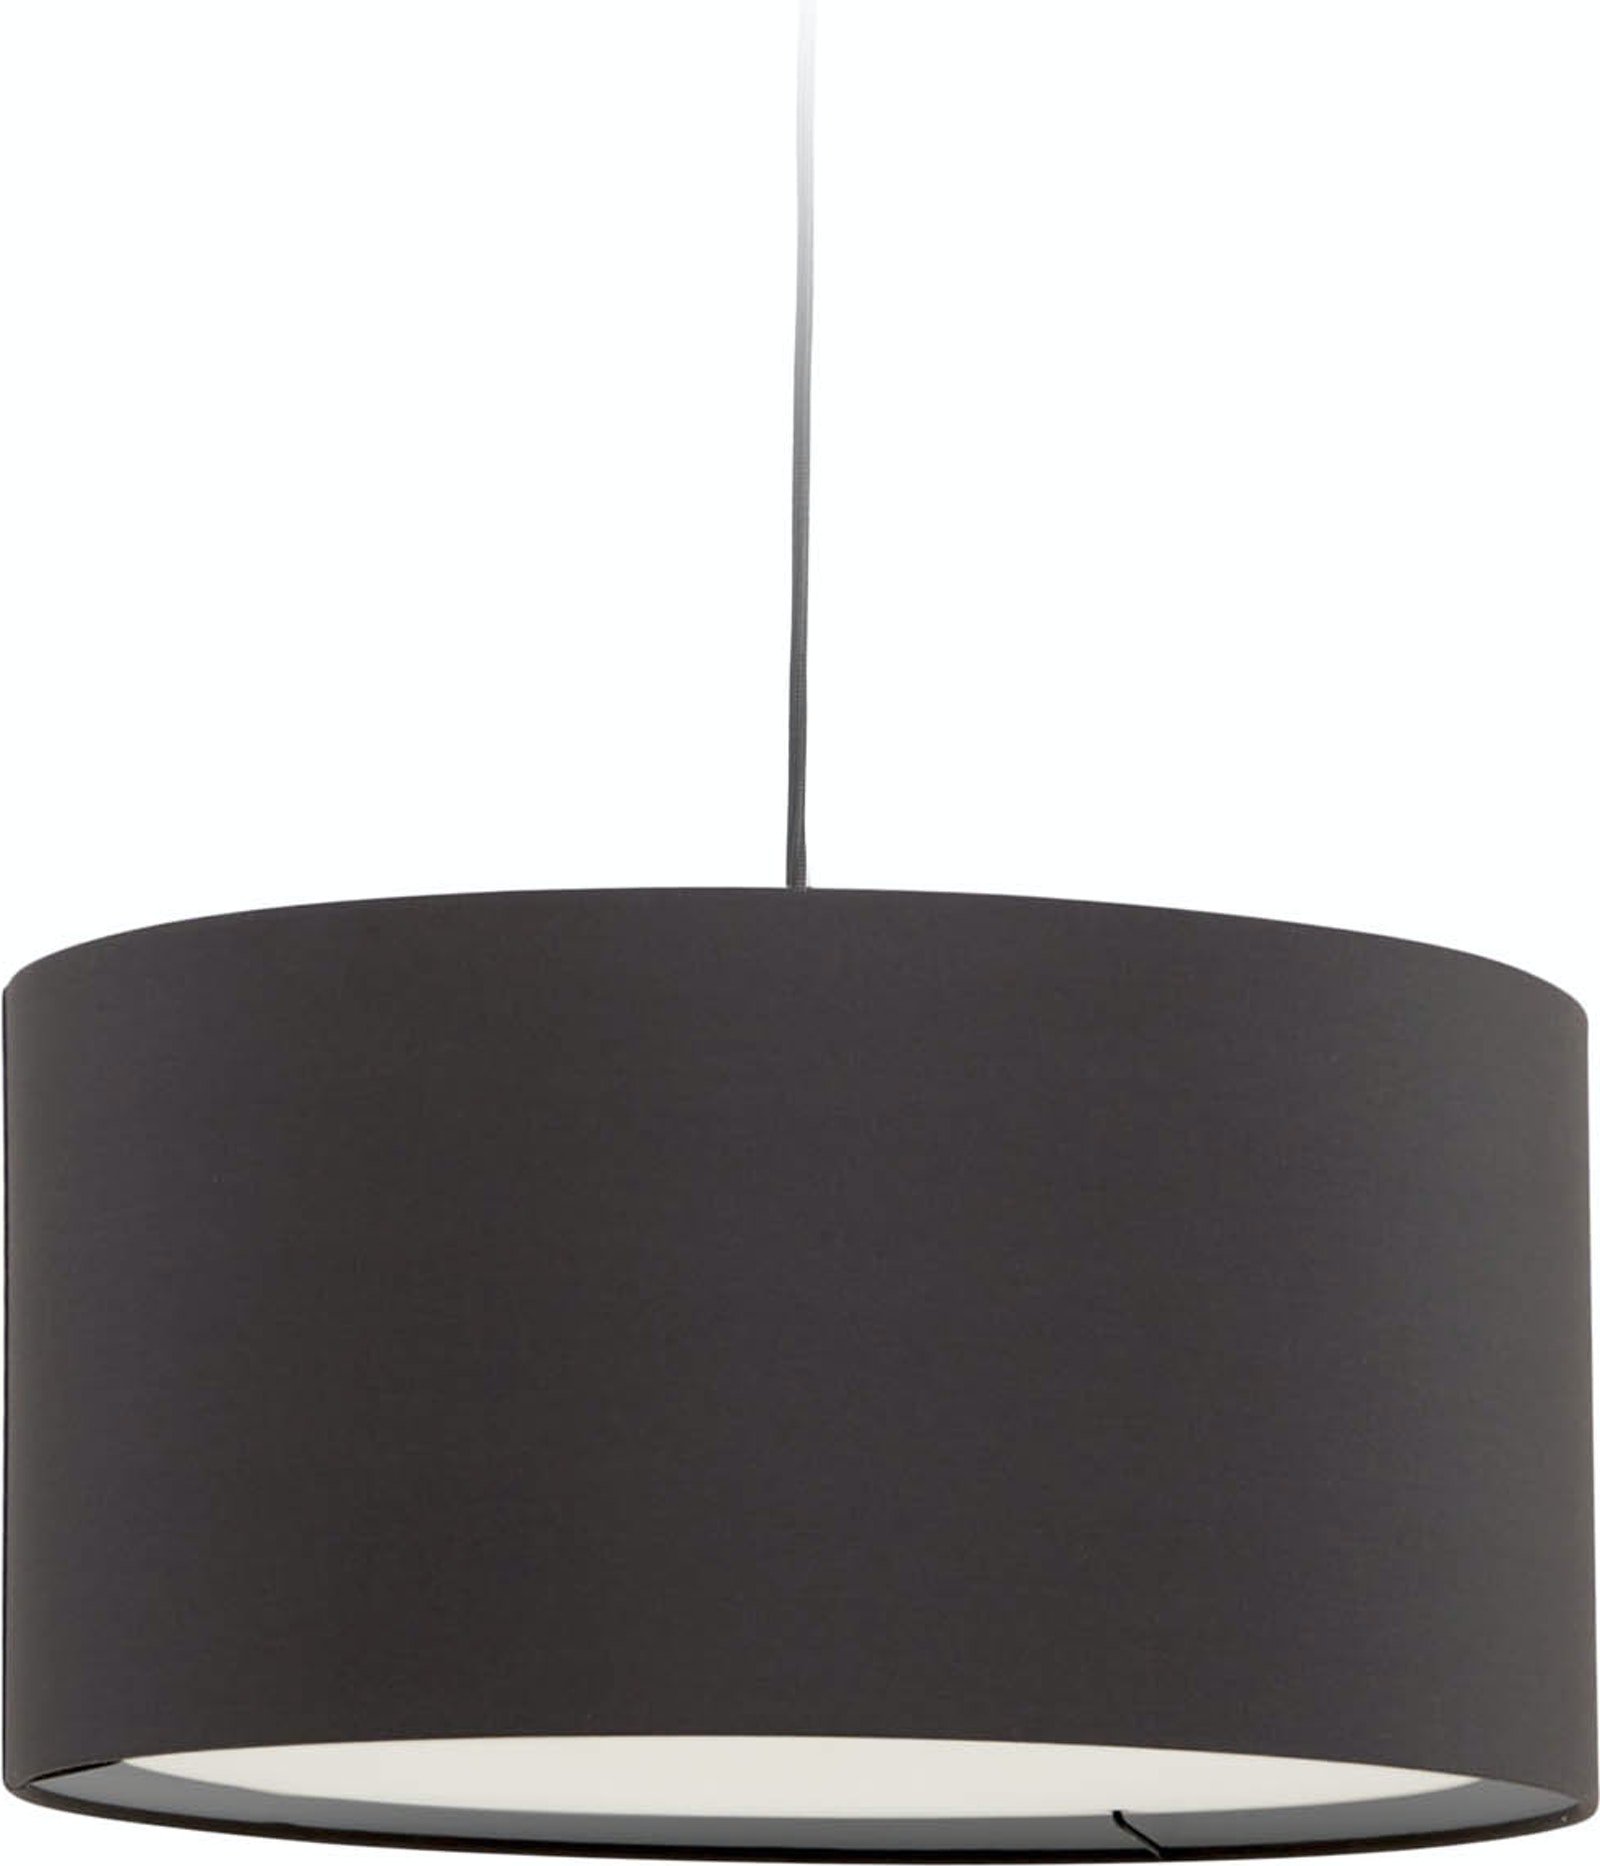 LAFORMA Grey Santana loftlampe - grå stof og hvid diffuser (Ø40)